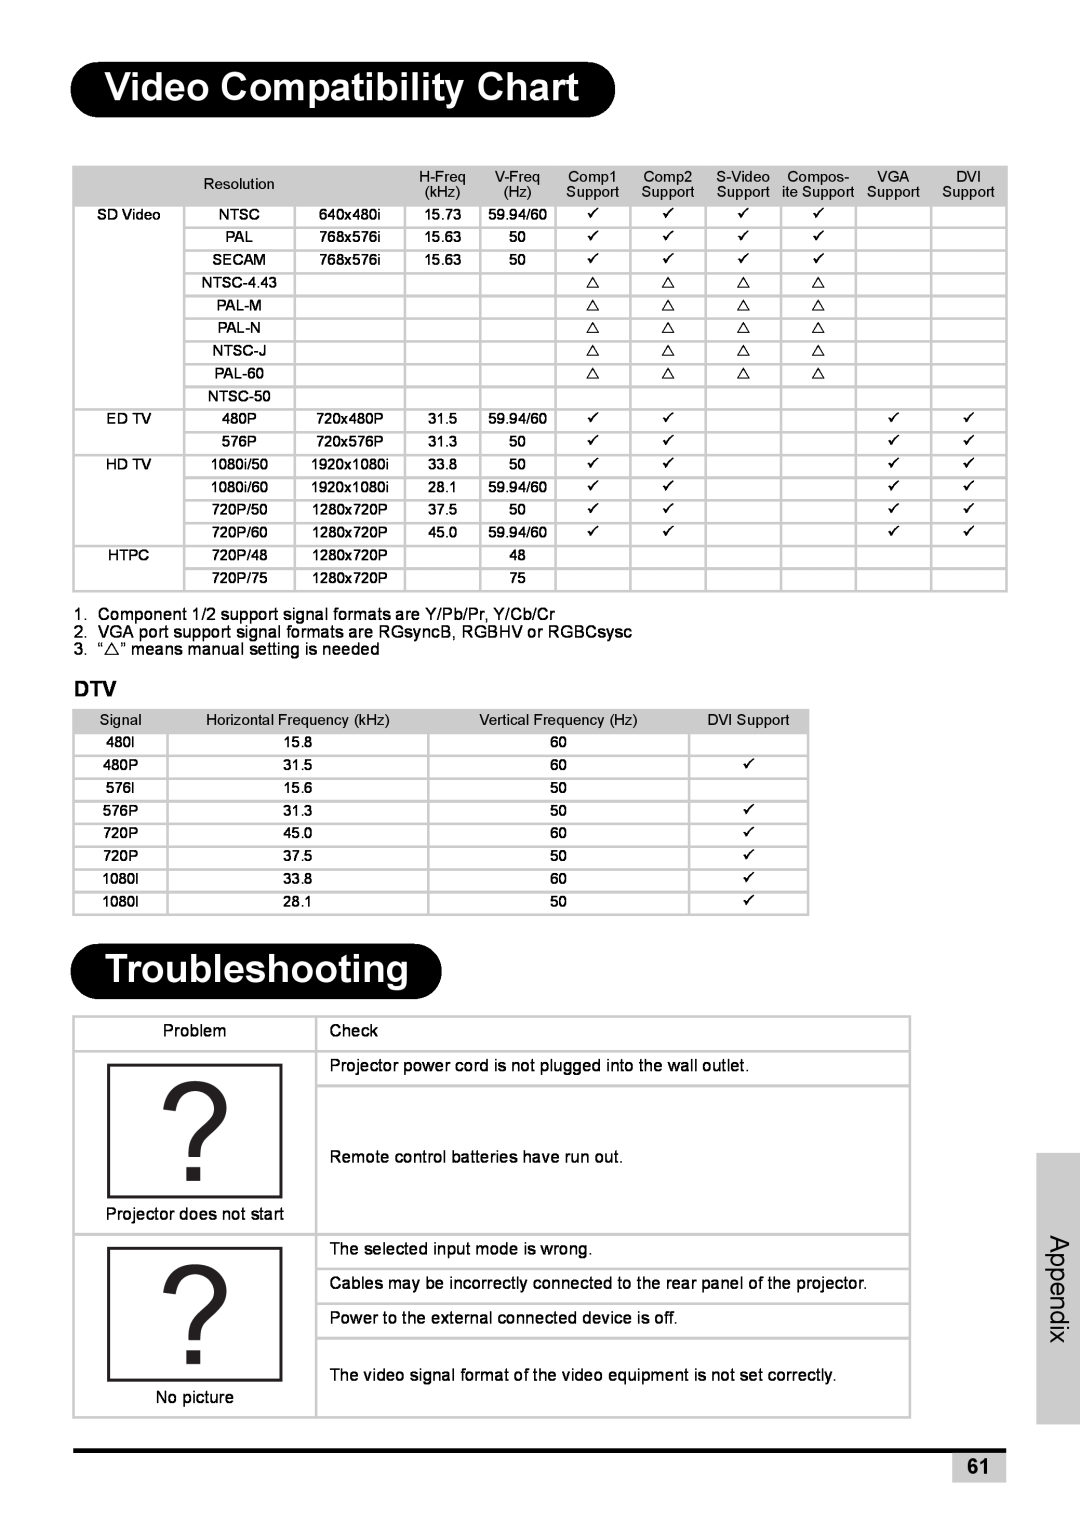 BOXLIGHT PREMIERE 30HD manual Video Compatibility Chart, Troubleshooting, Appendix 